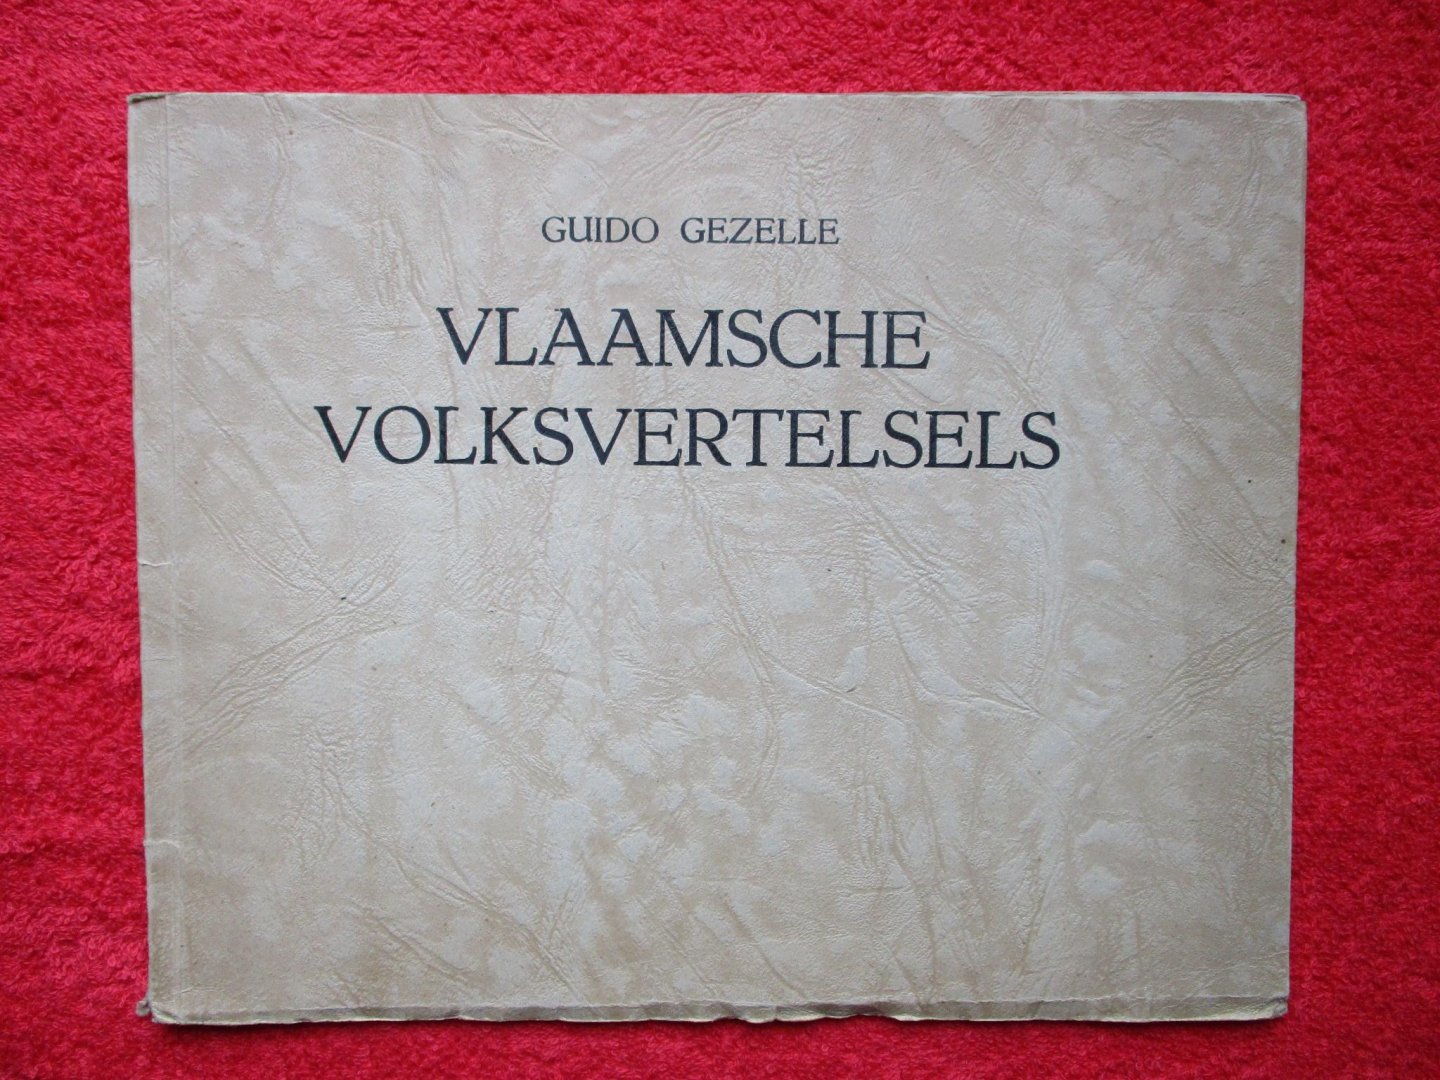 Gezelle, Guido. - Vlaamsche volksvertelsels.